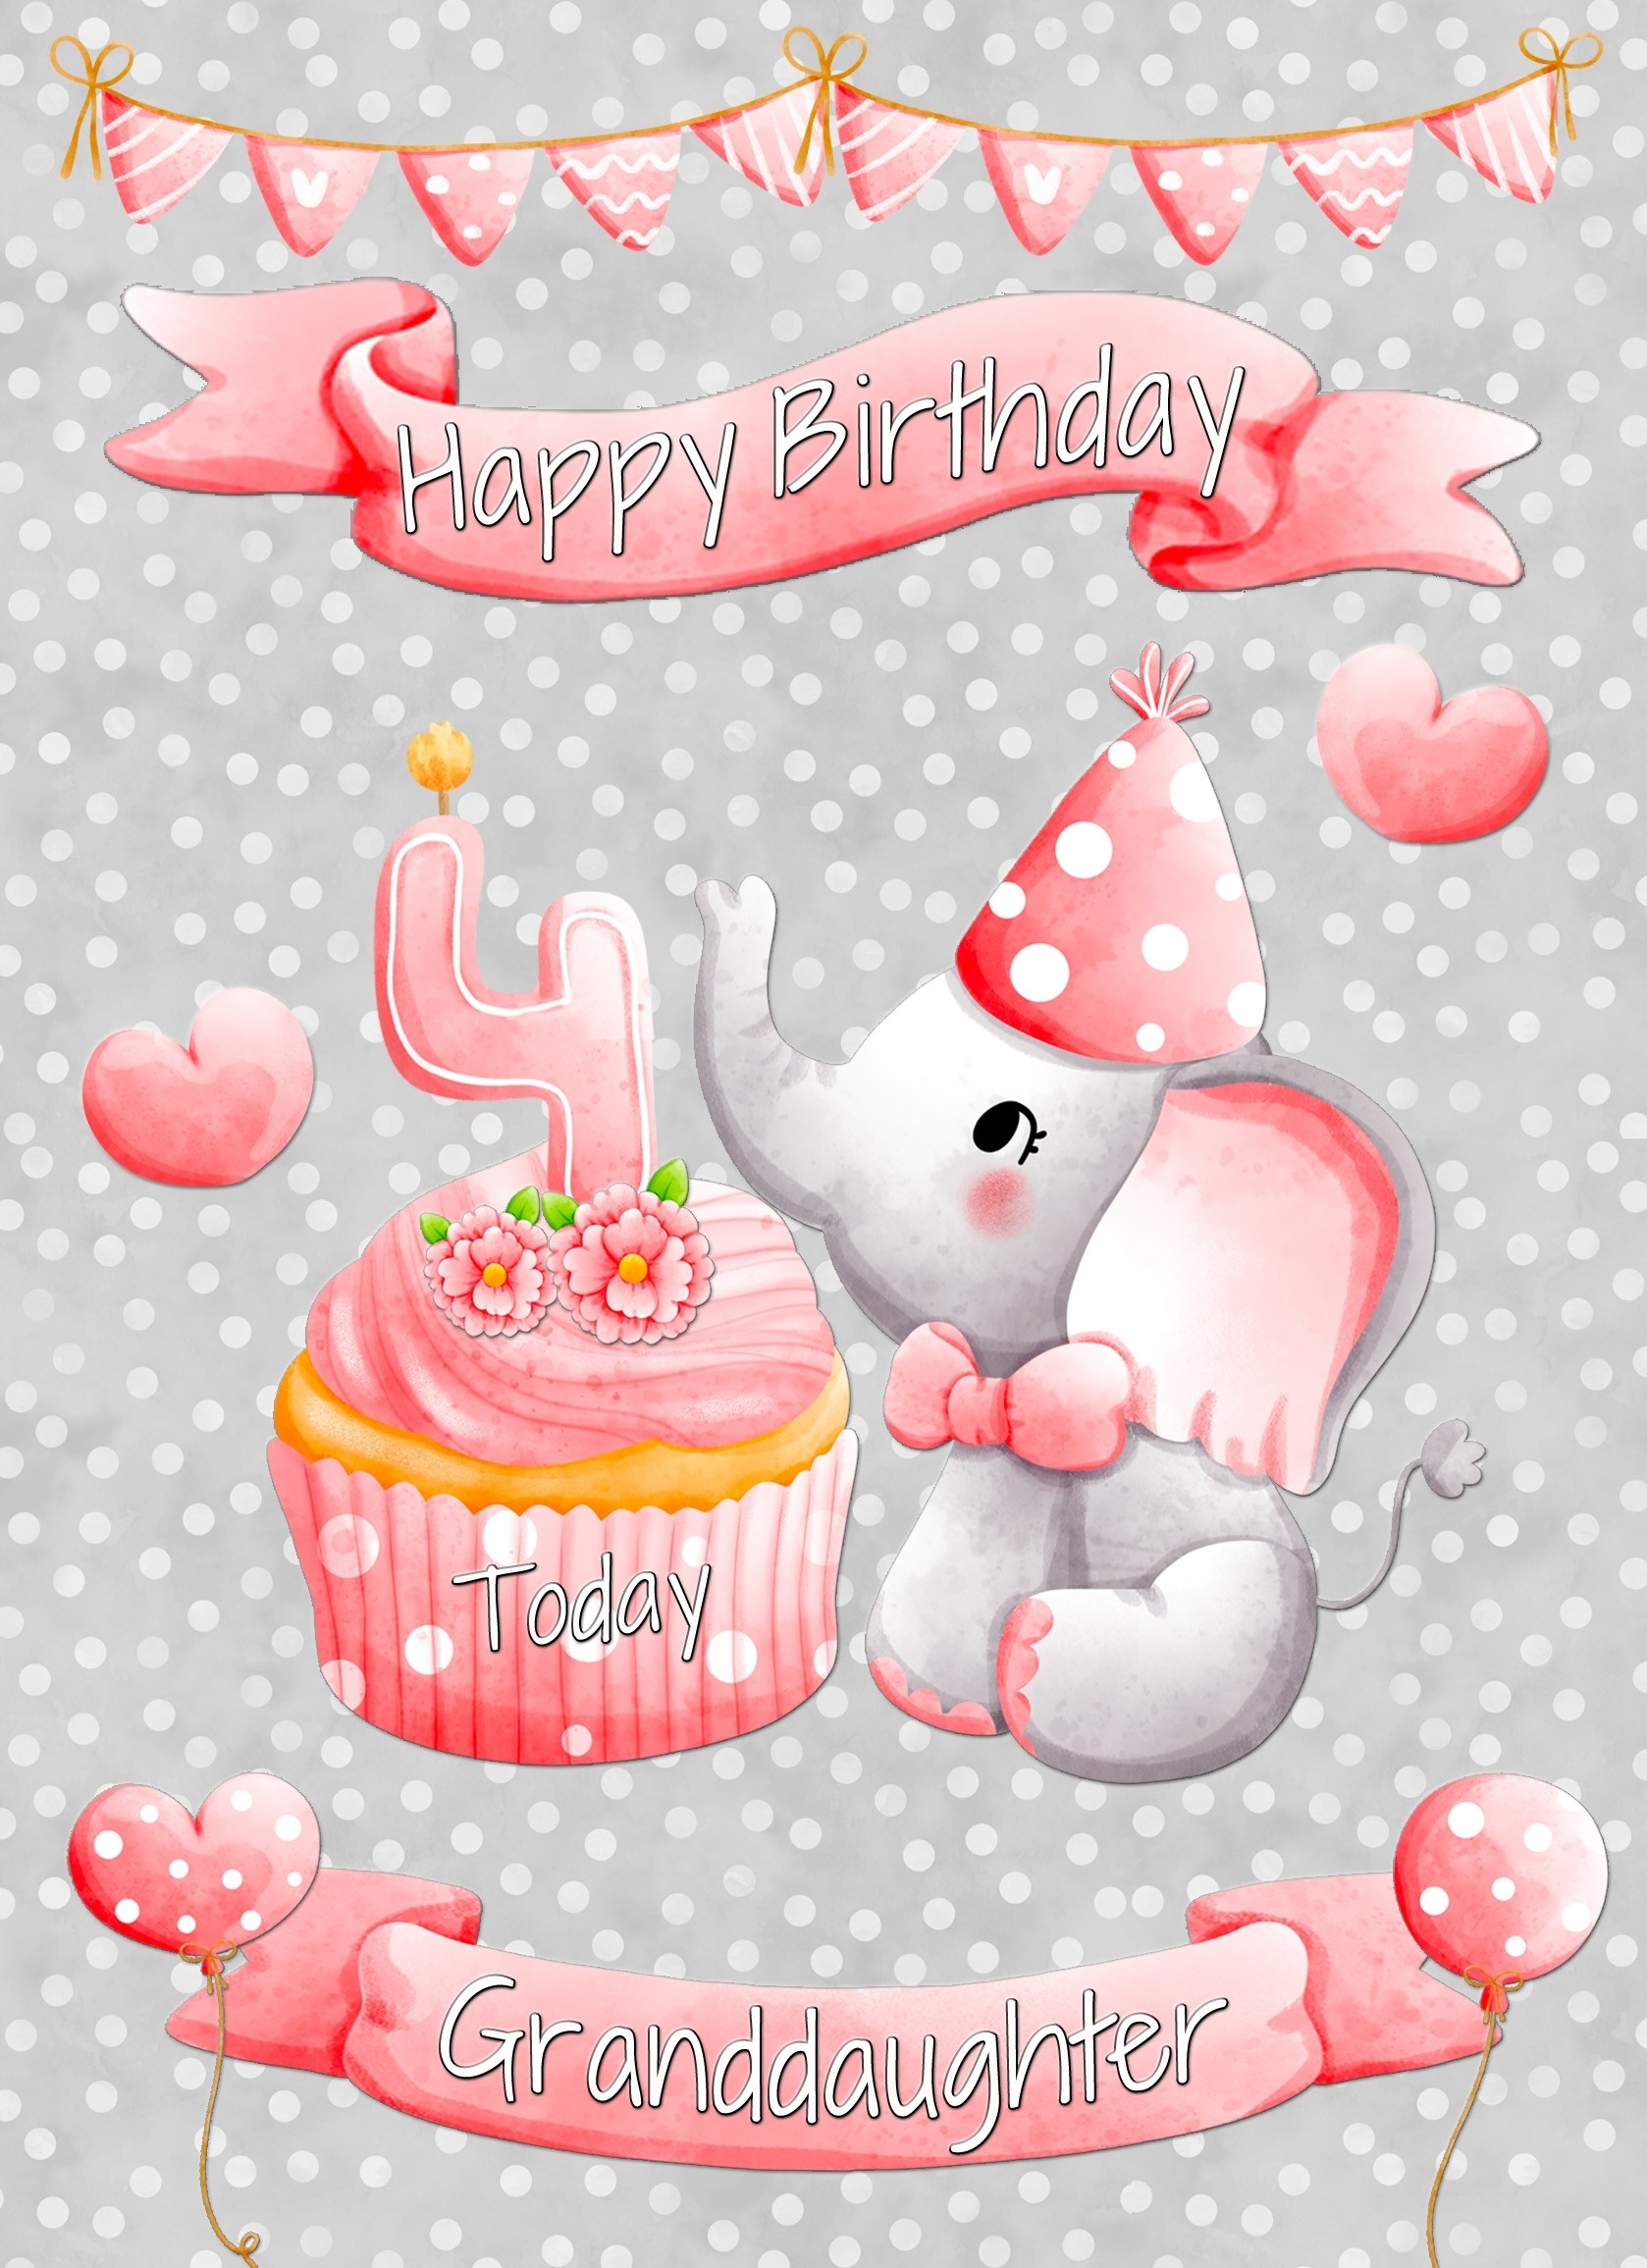 Granddaughter 4th Birthday Card (Grey Elephant)